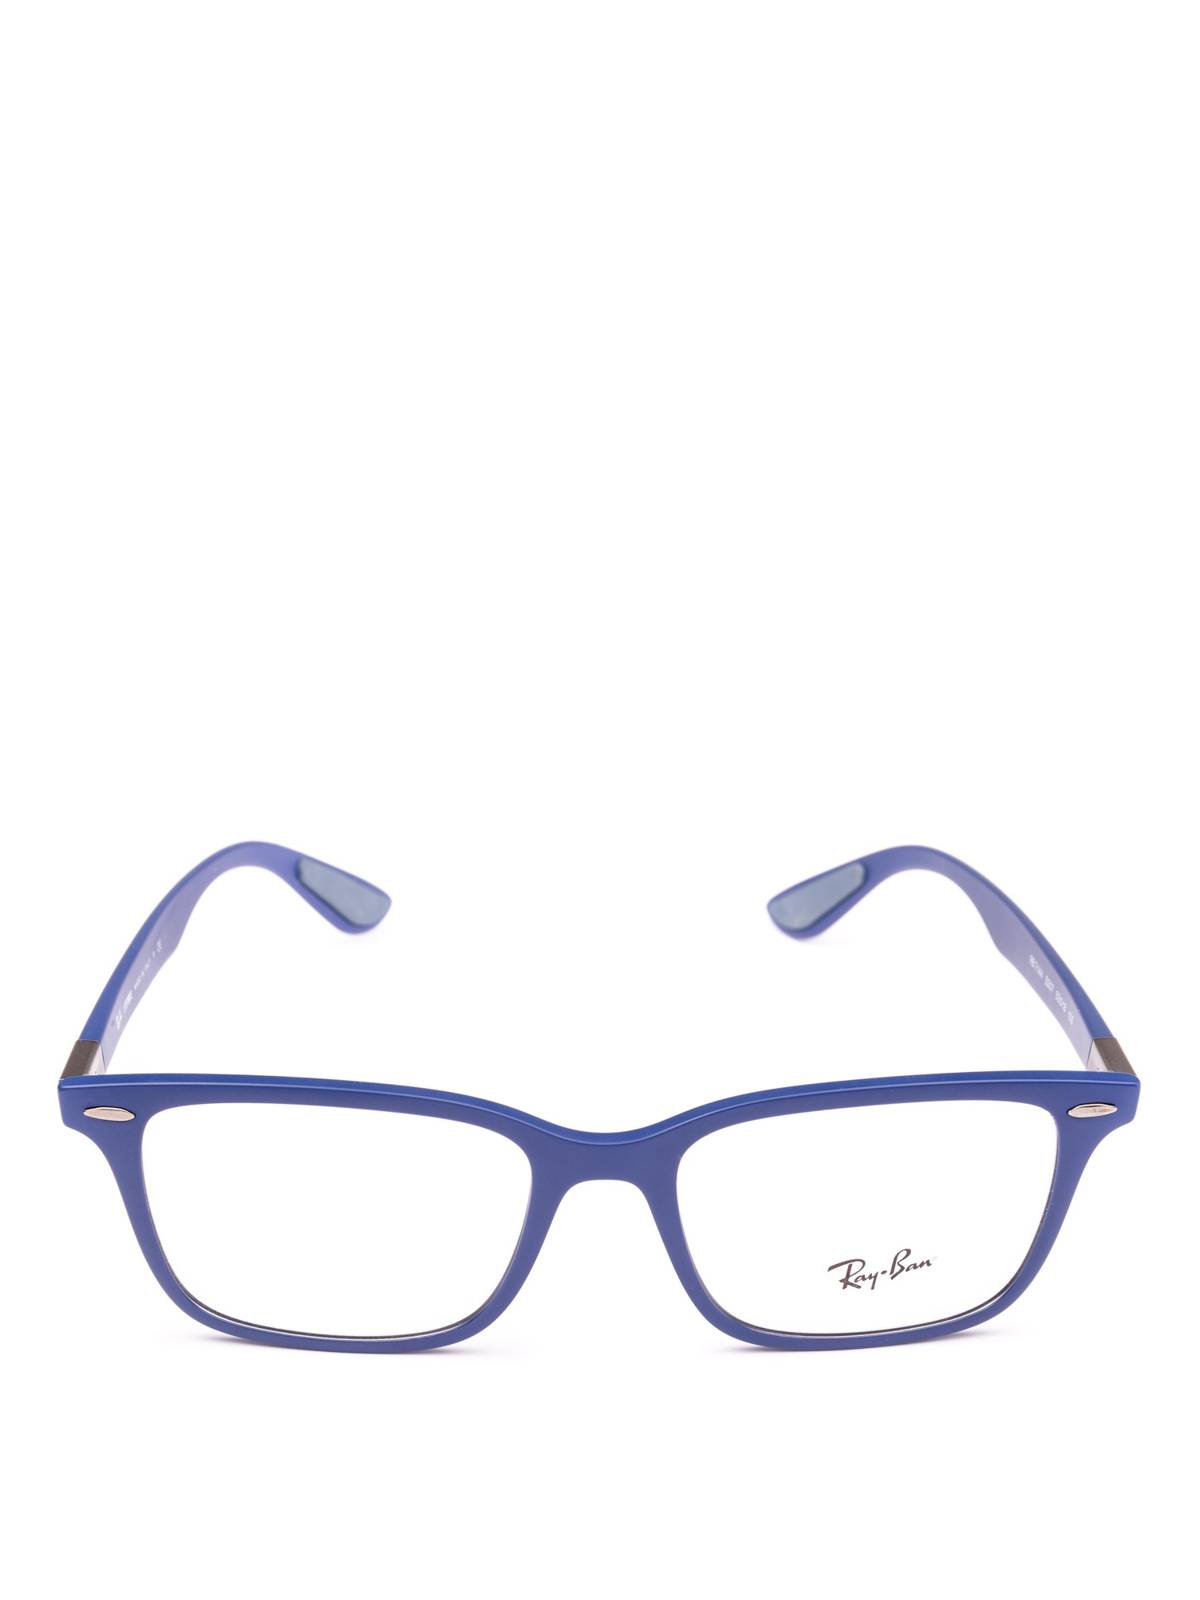 ray ban glasses blue frame